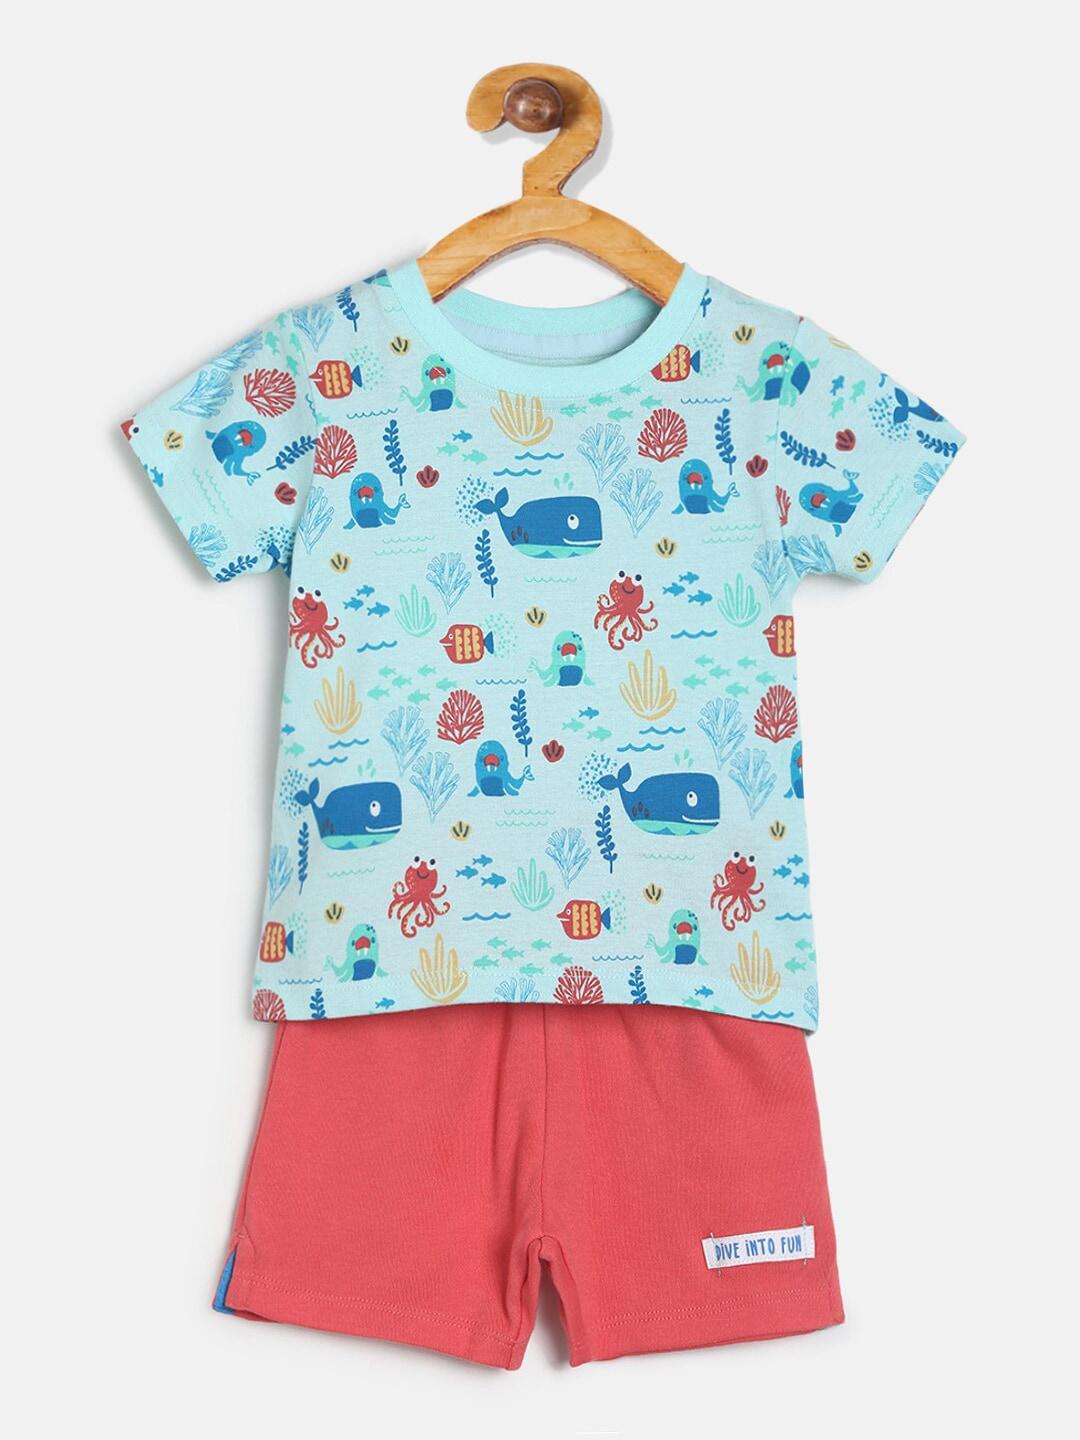 MINI KLUB Infant Boys Blue & Pink Printed Clothing Set